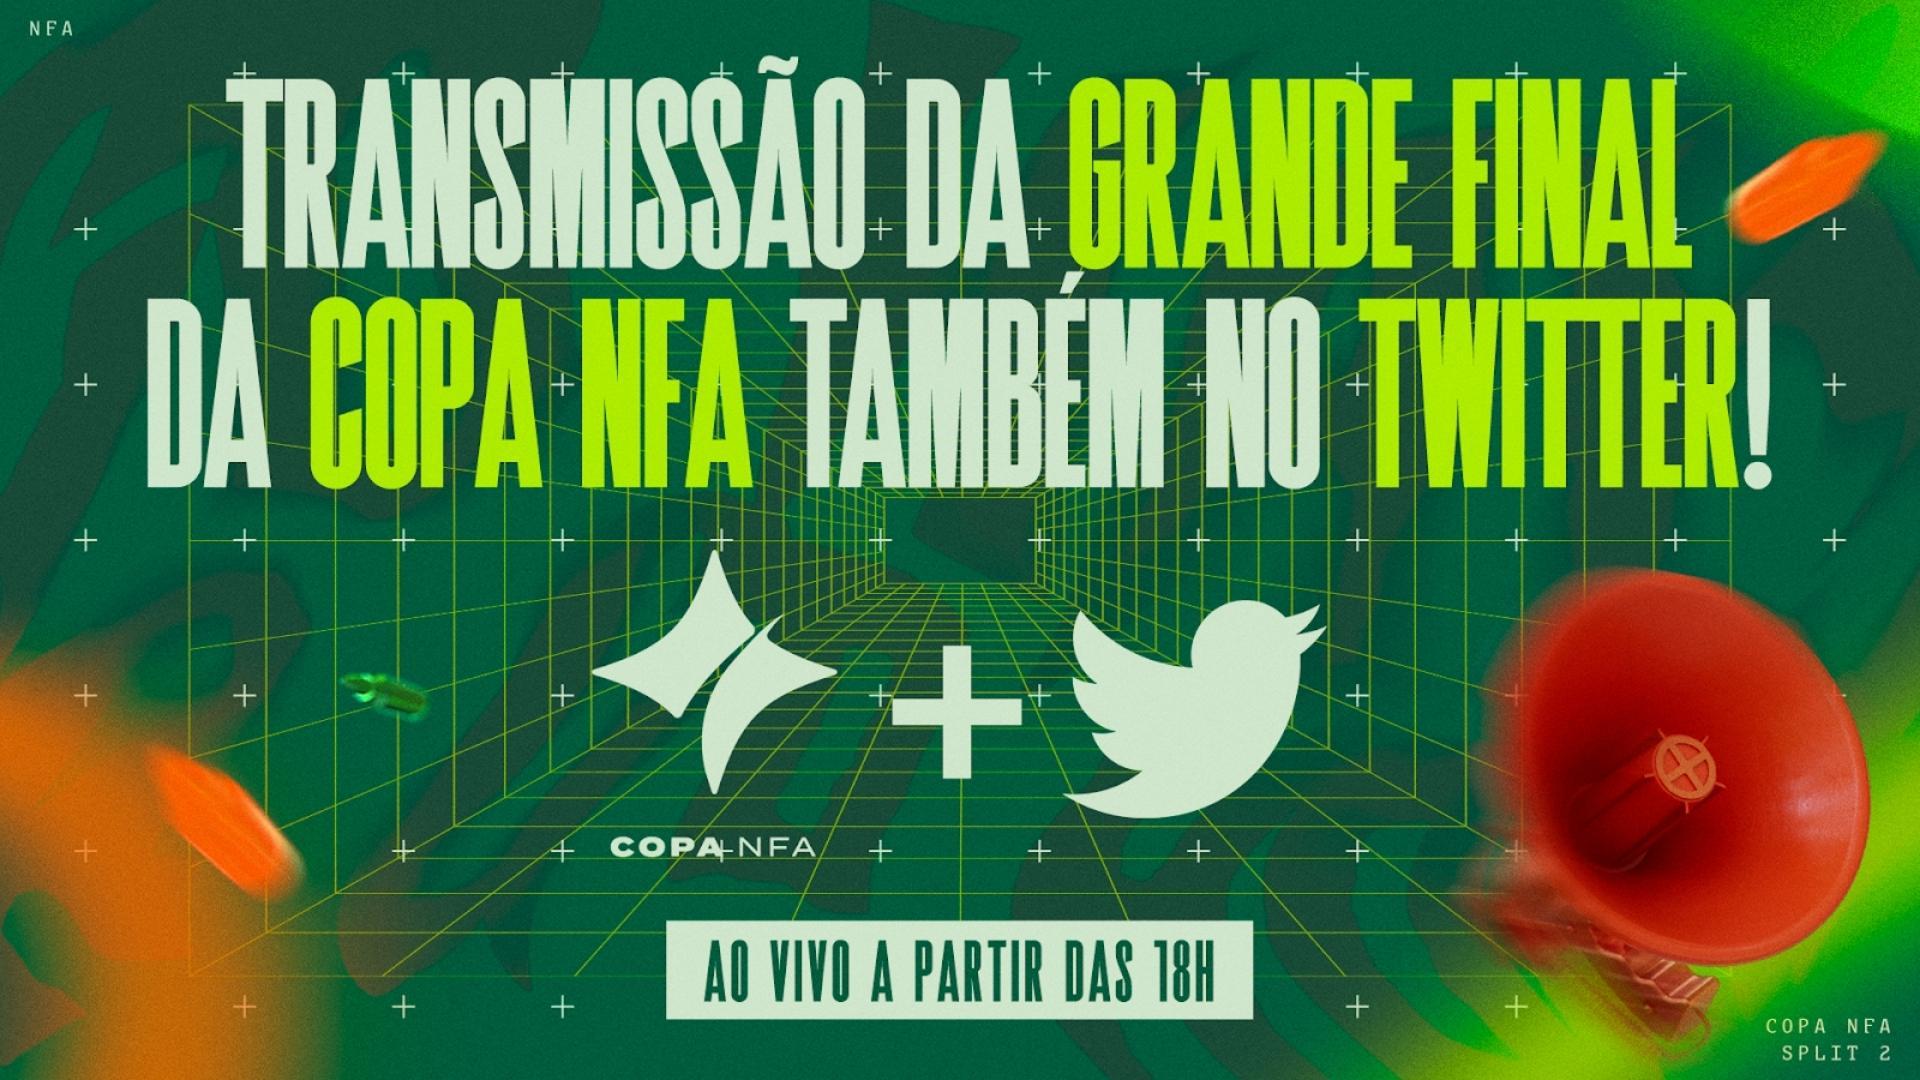 NFA fecha parceria inédita com Twitter para transmissão da final da “Copa NFA”